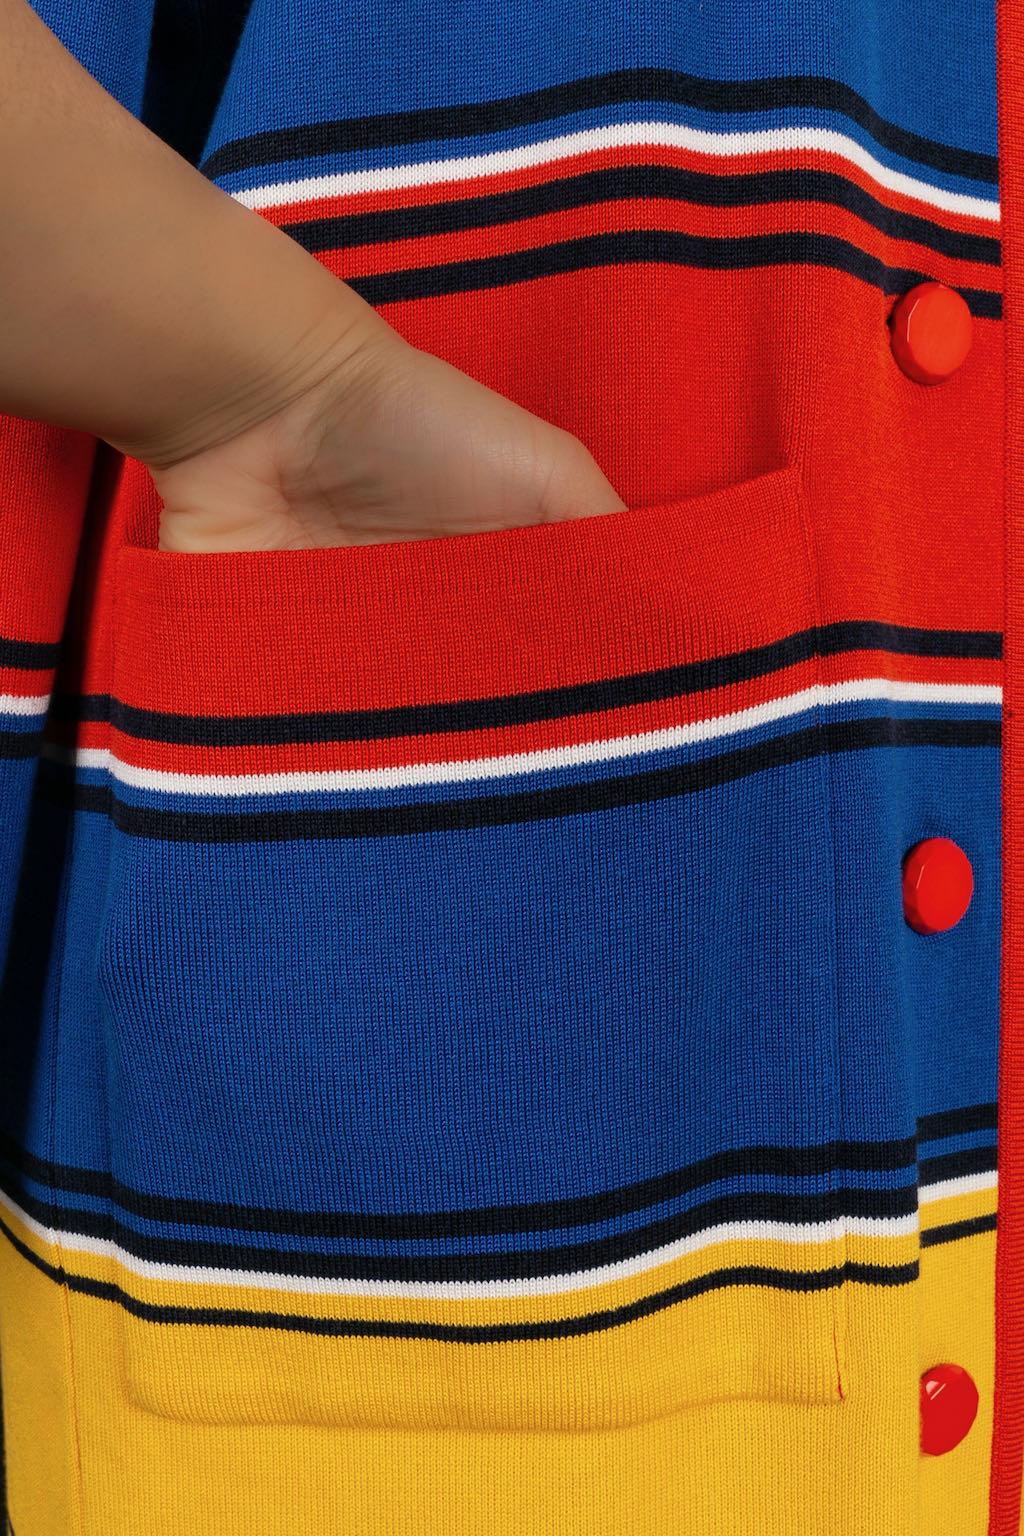 Women's Yves Saint Laurent Multicolored Knitted Coat Dress For Sale